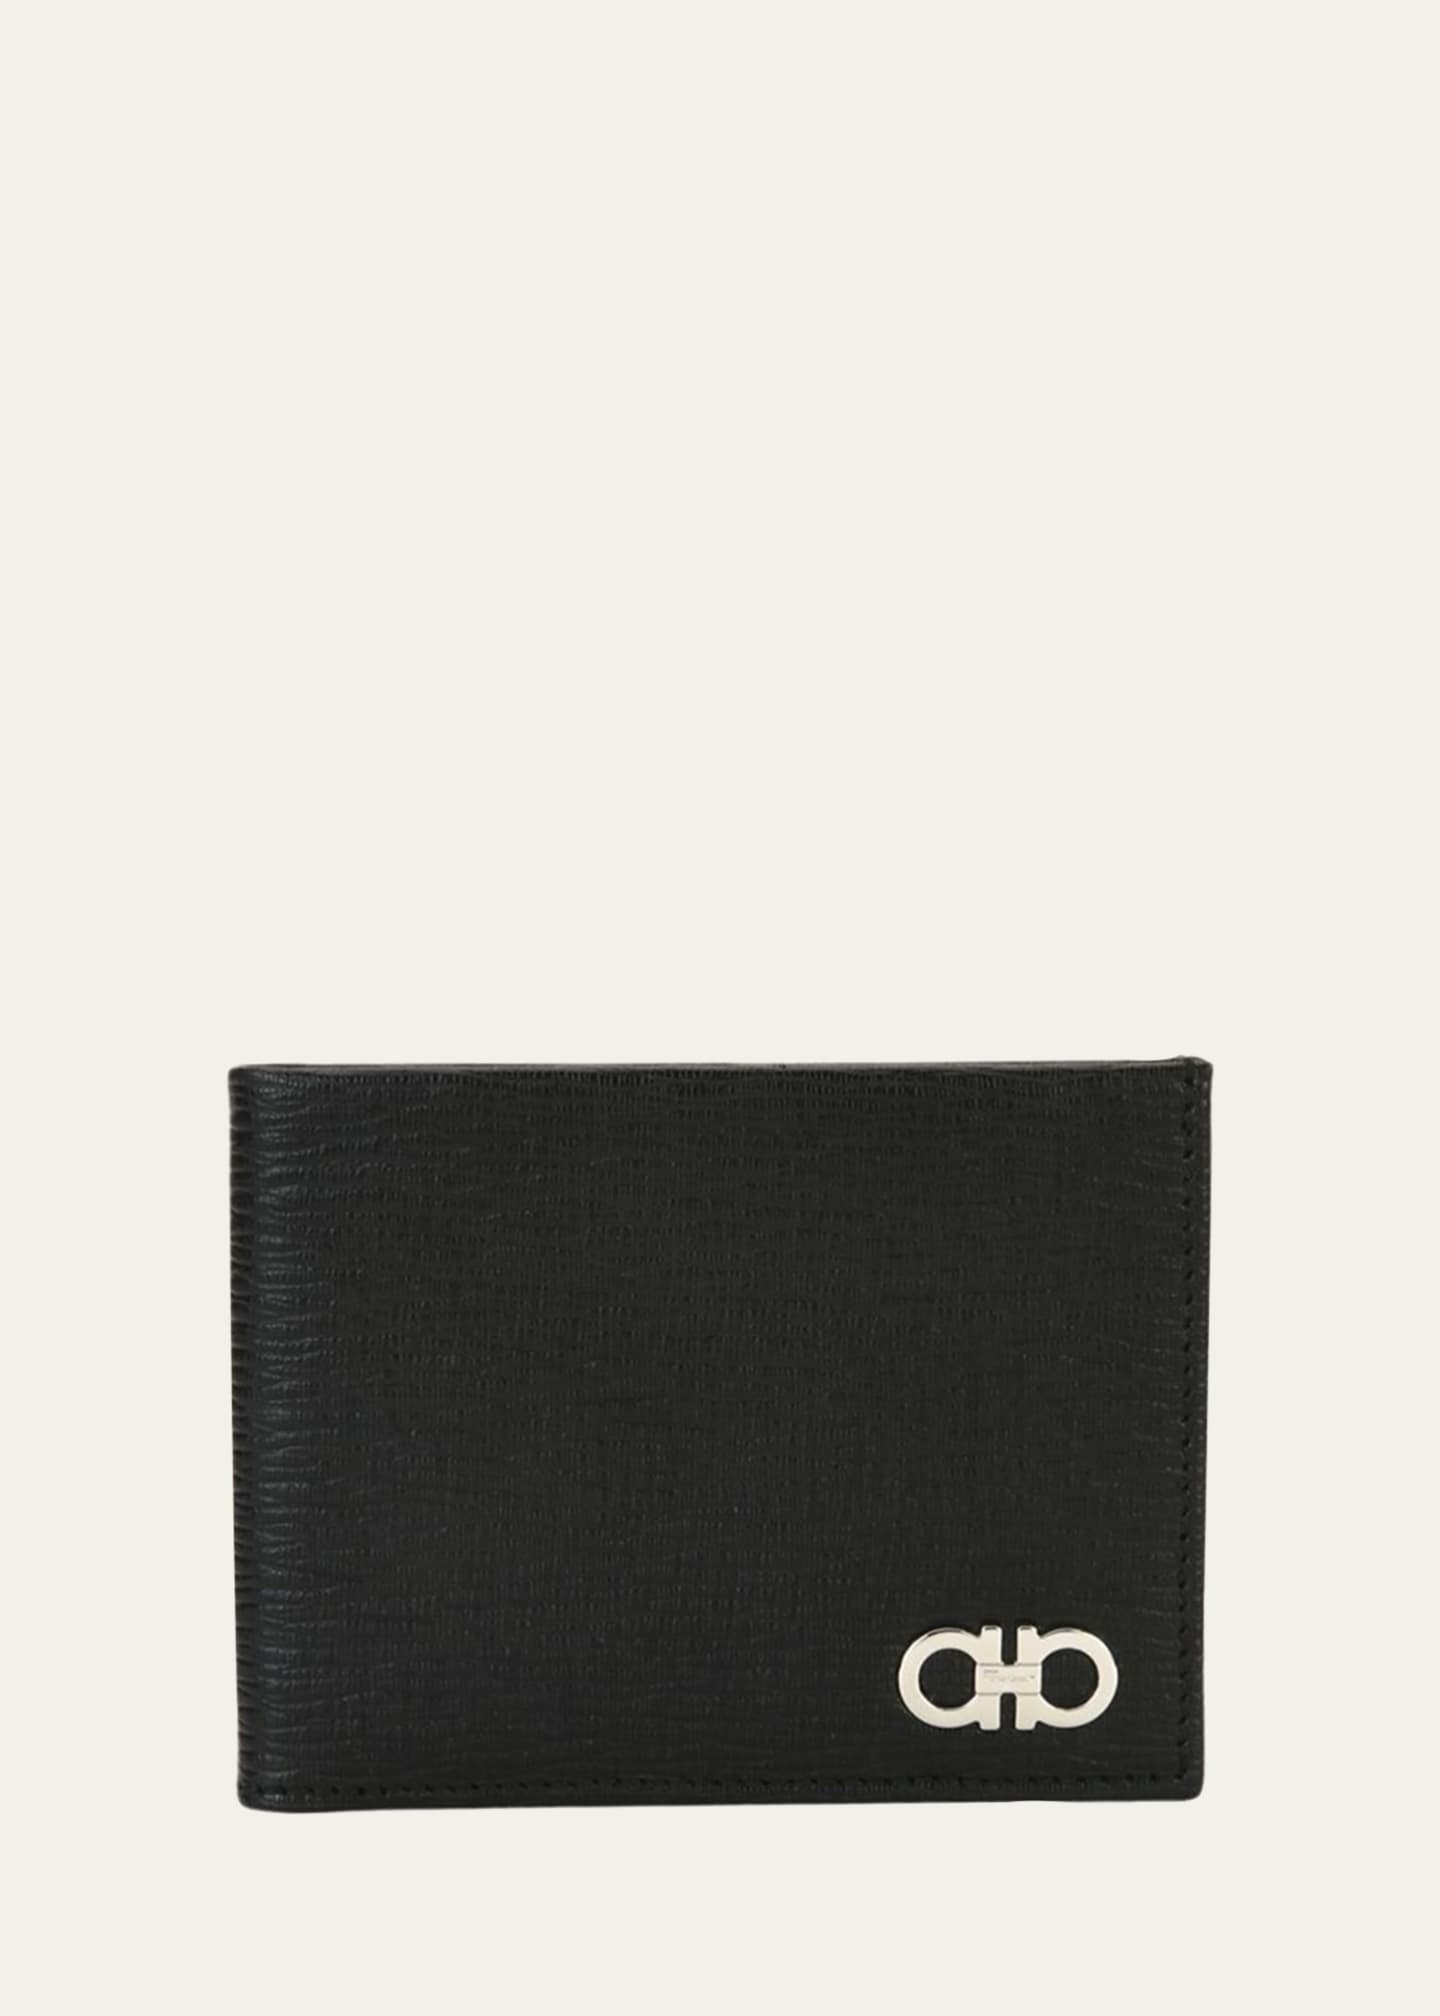 Ferragamo Men's Revival Gancini Bi-Fold Leather Wallet, Black/Red ...